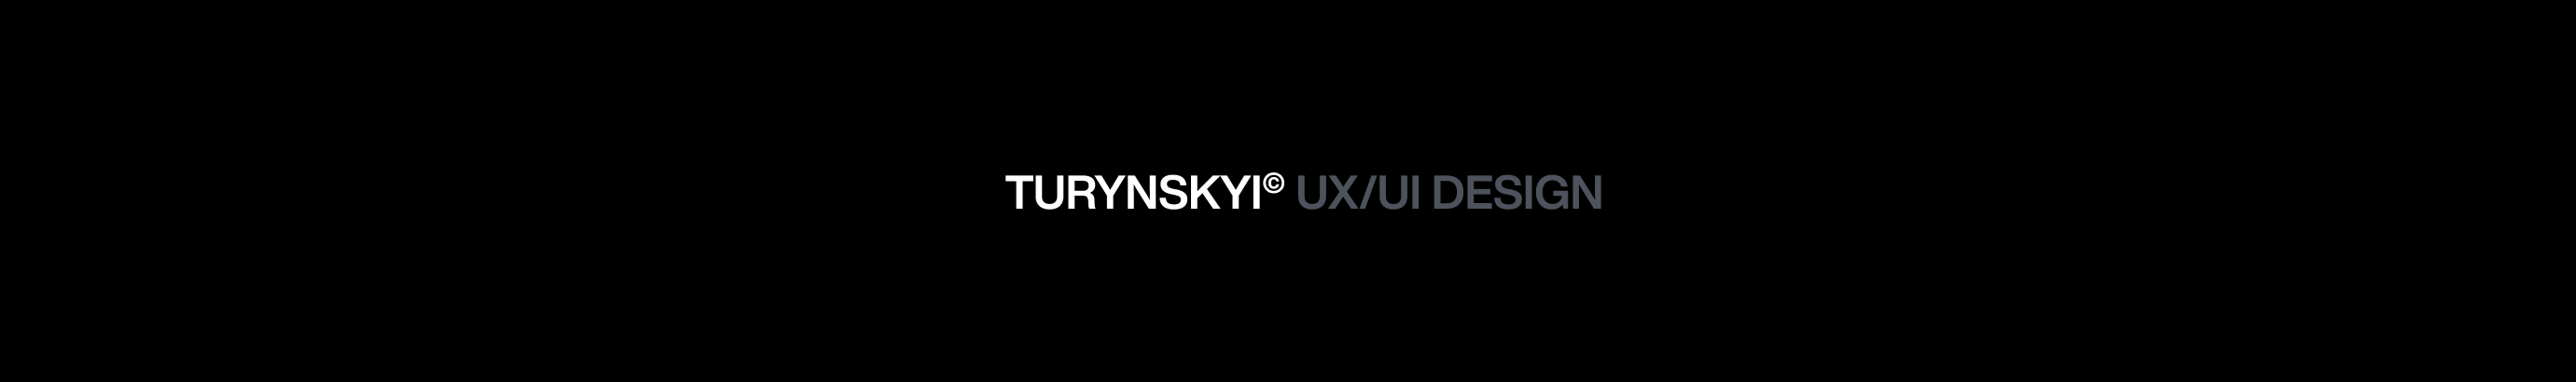 Denys Turynskyi's profile banner